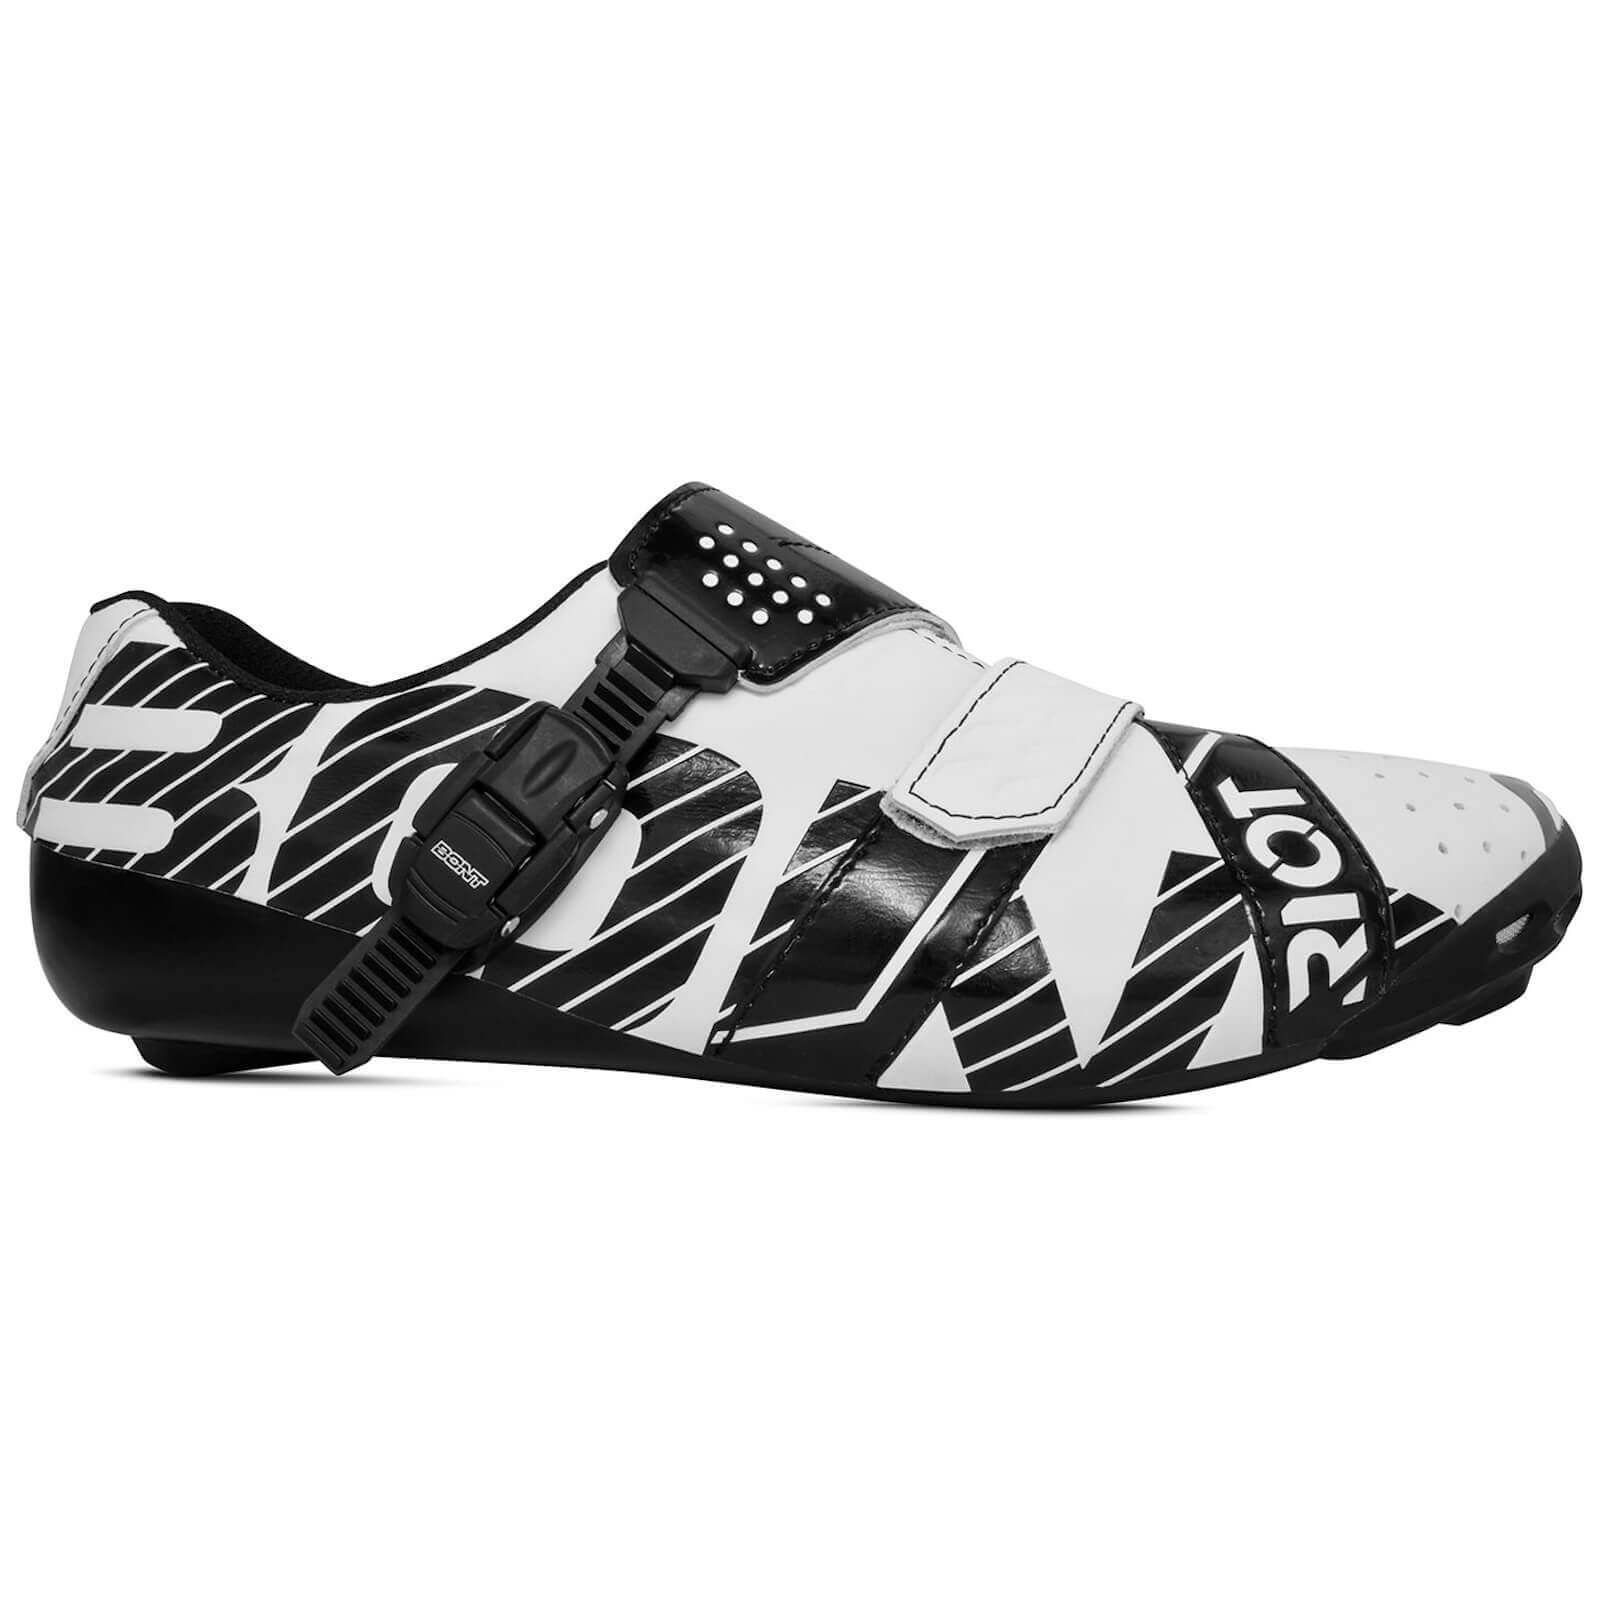 Bont Riot Road Shoes - EU 42 - White/Black